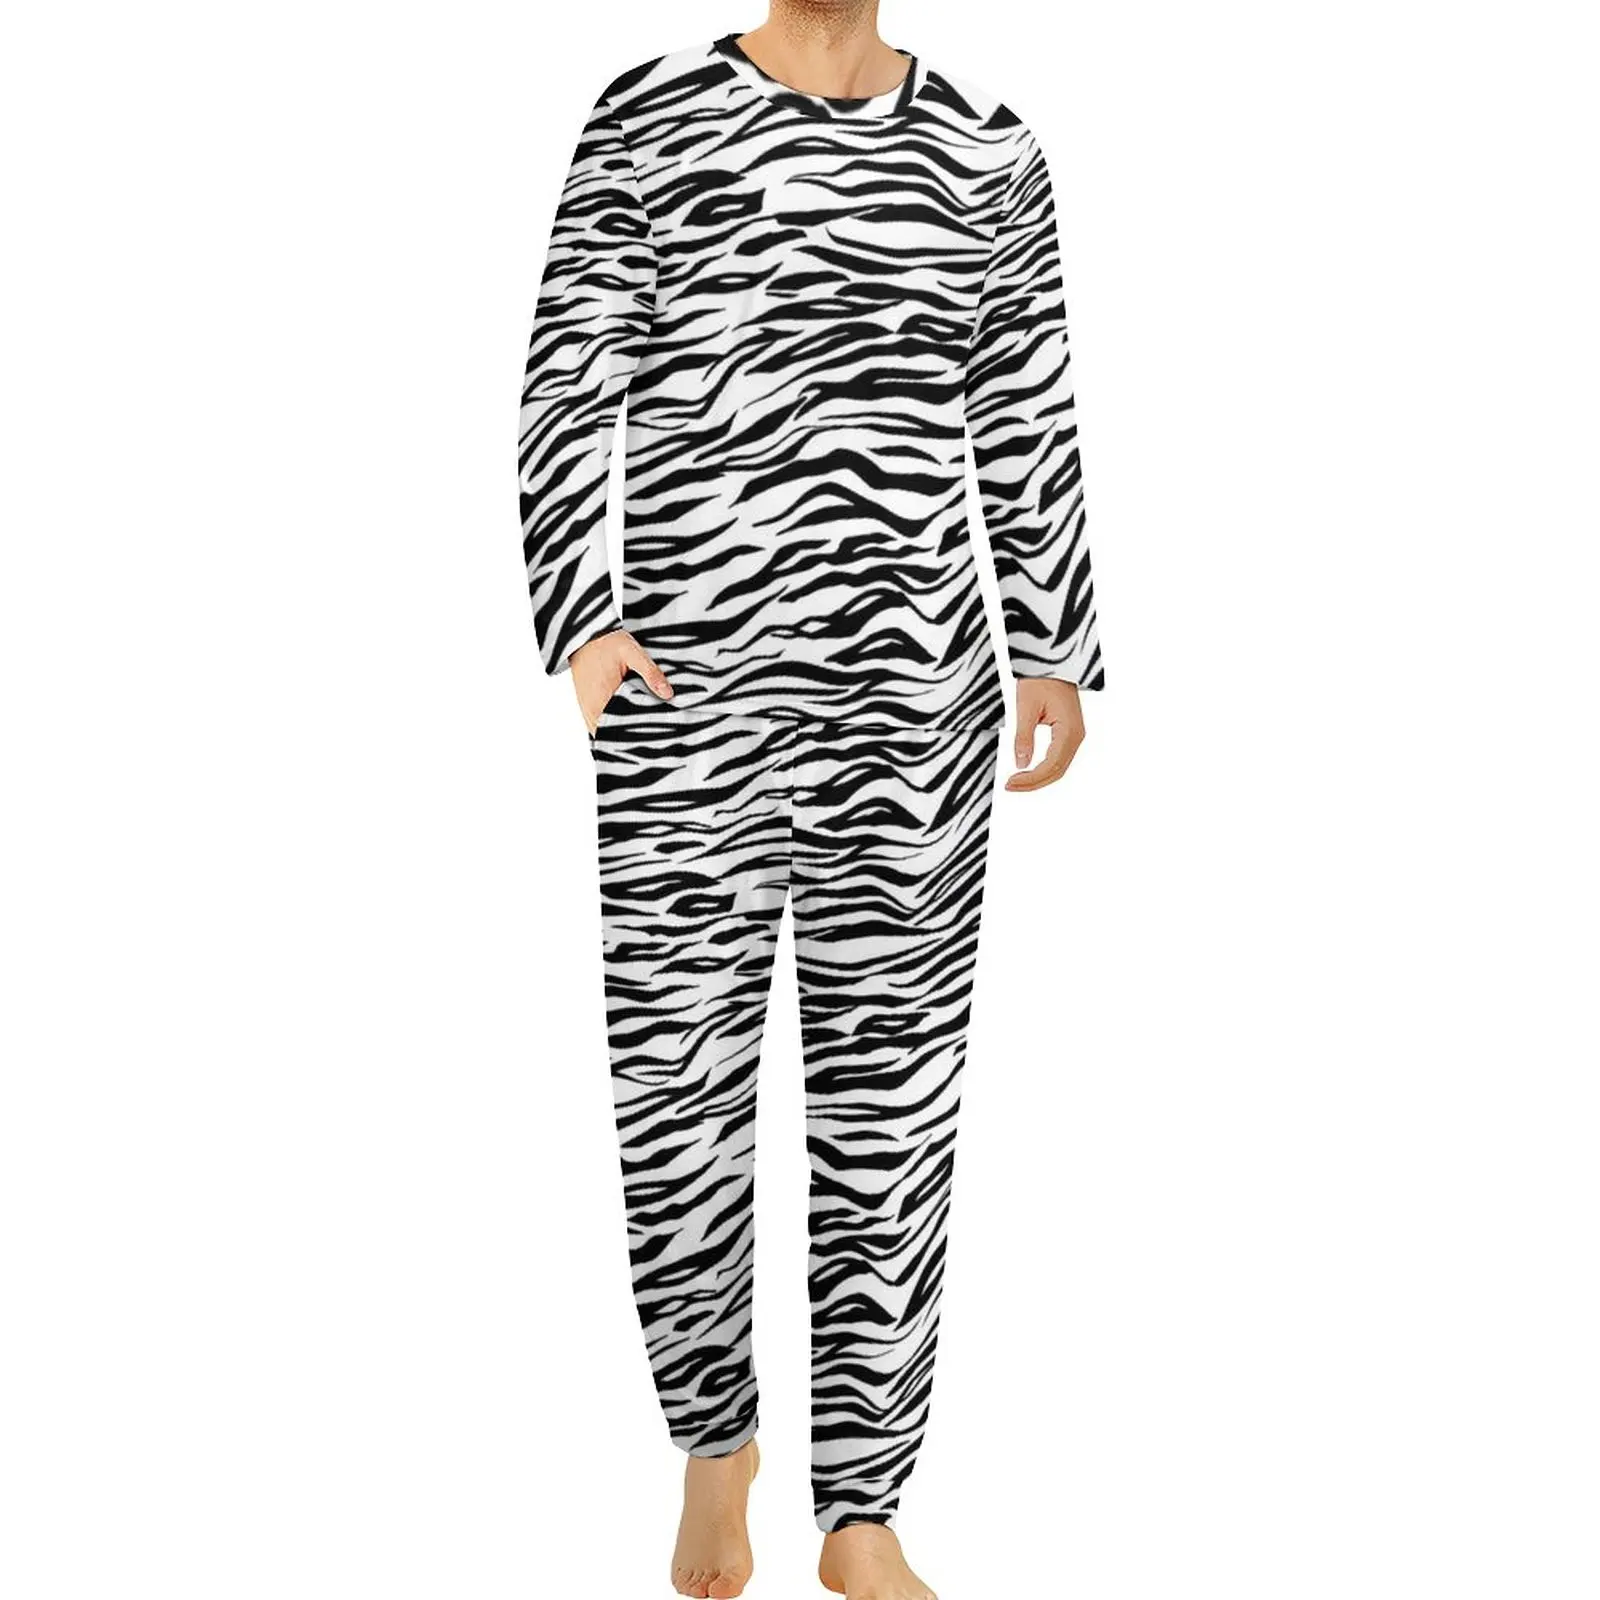 

Black White Zebra Pajamas Long-Sleeve Animal Print 2 Pieces Room Pajama Sets Autumn Men Pattern Warm Big Size Nightwear